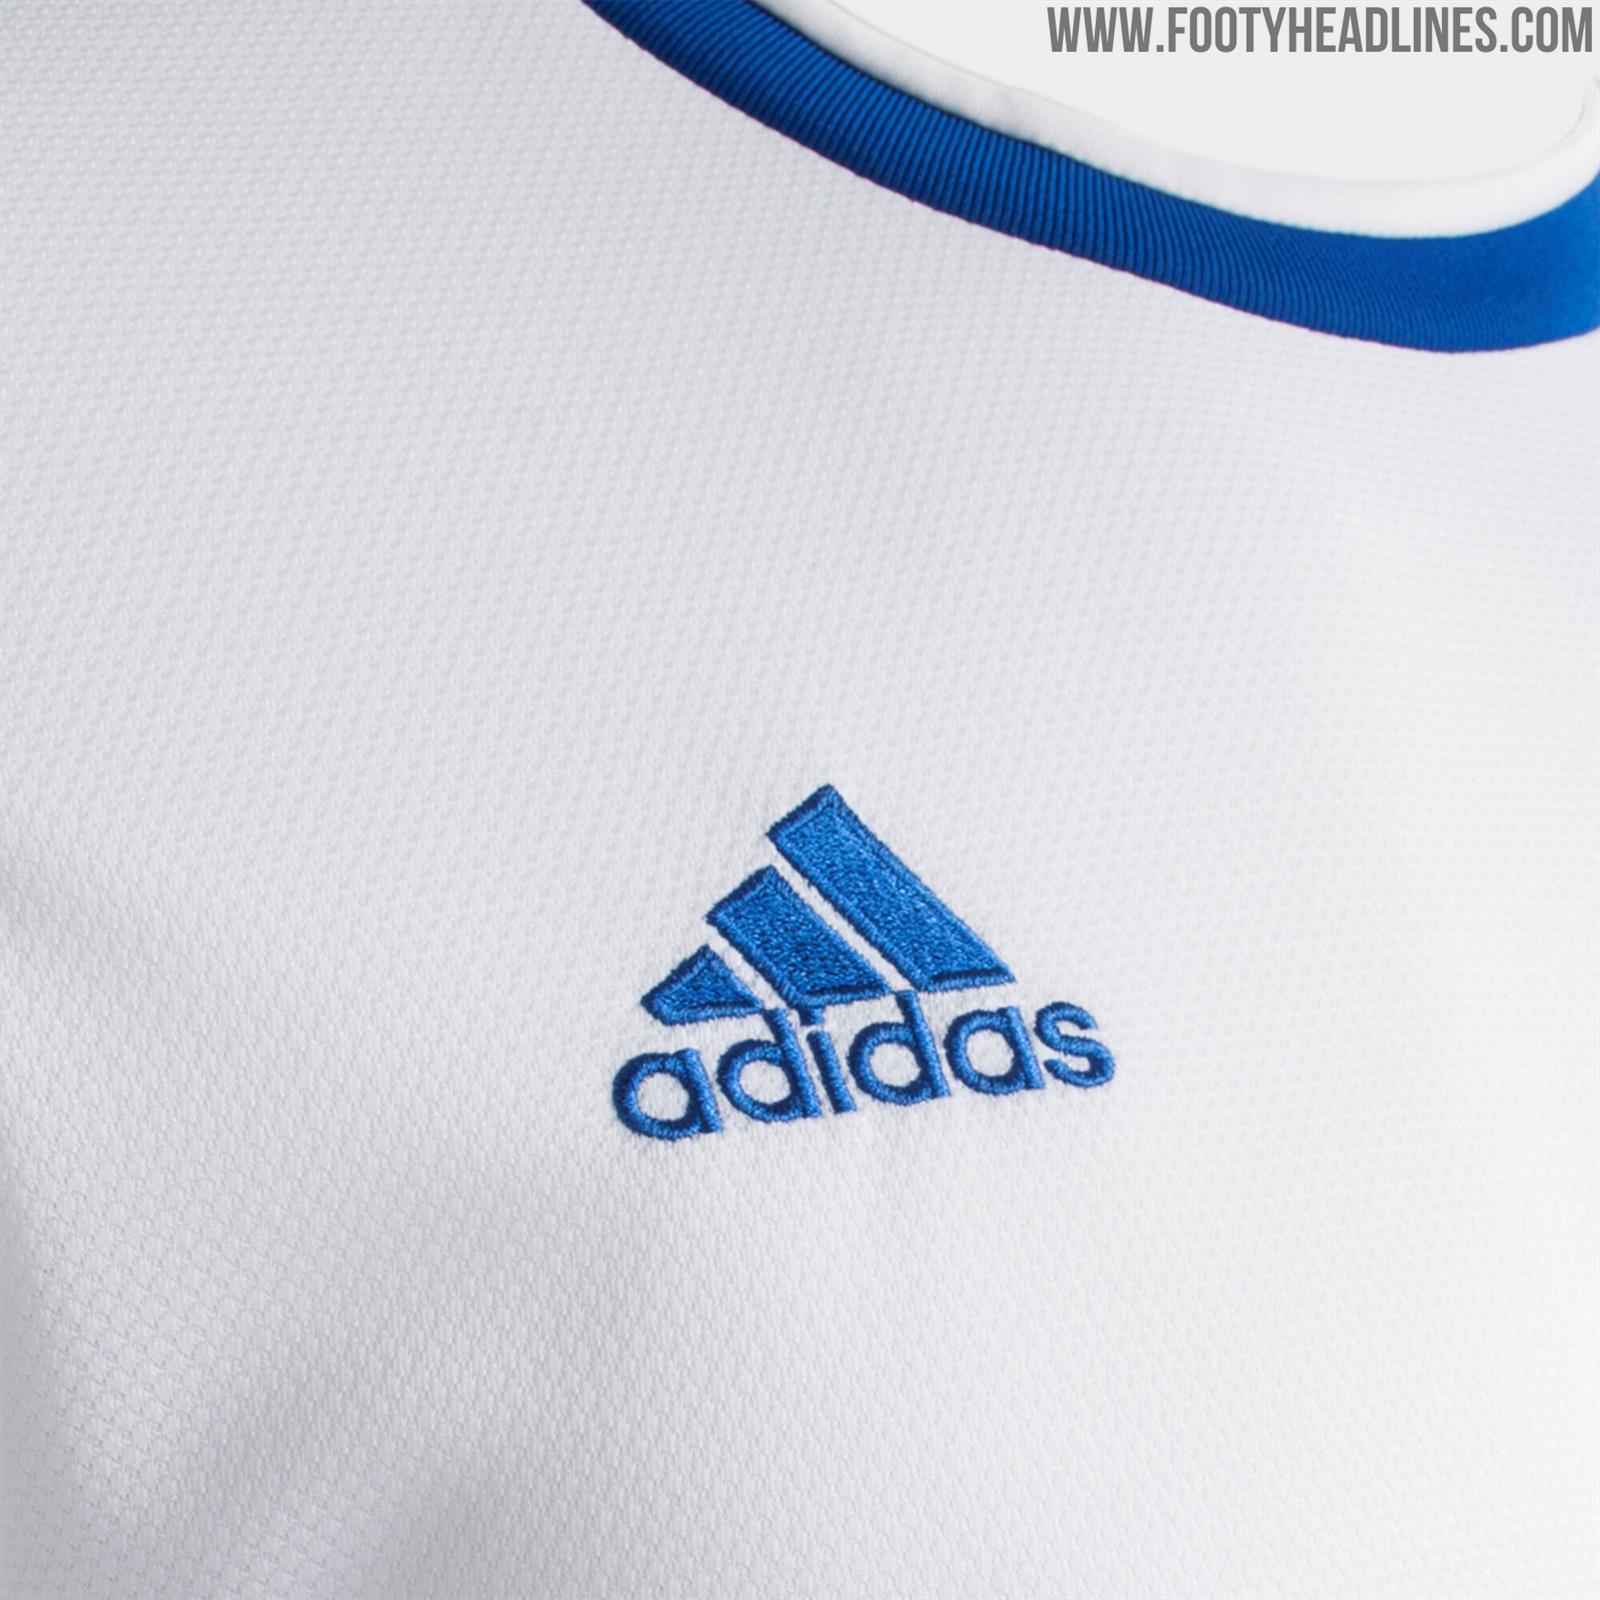 No More Umbro - Adidas Cruzeiro 2020 Home & Away Kits Released - Footy ...